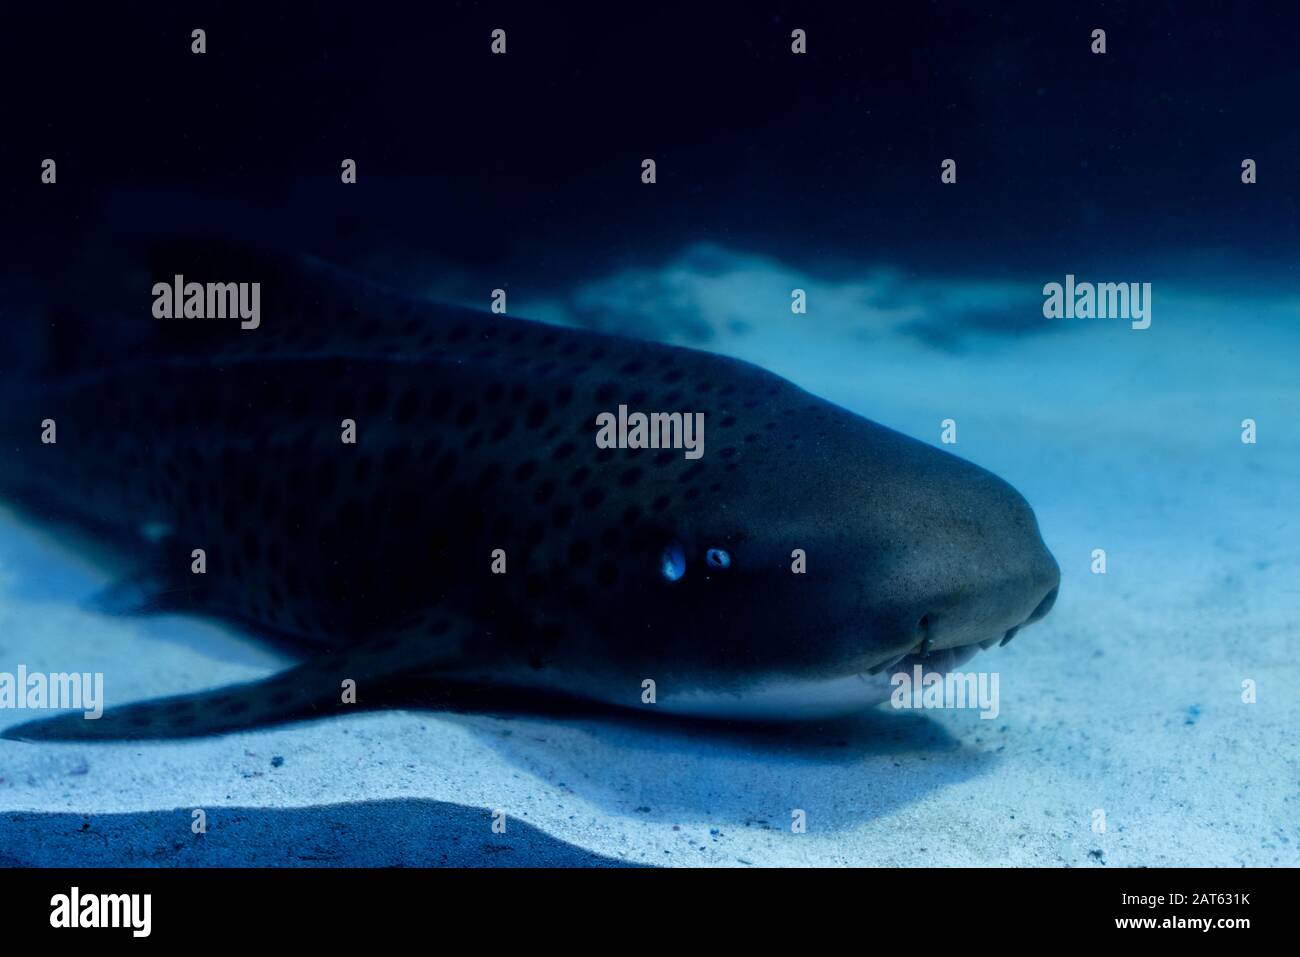 Wels catfish swimming under water in dark aquarium Stock Photo